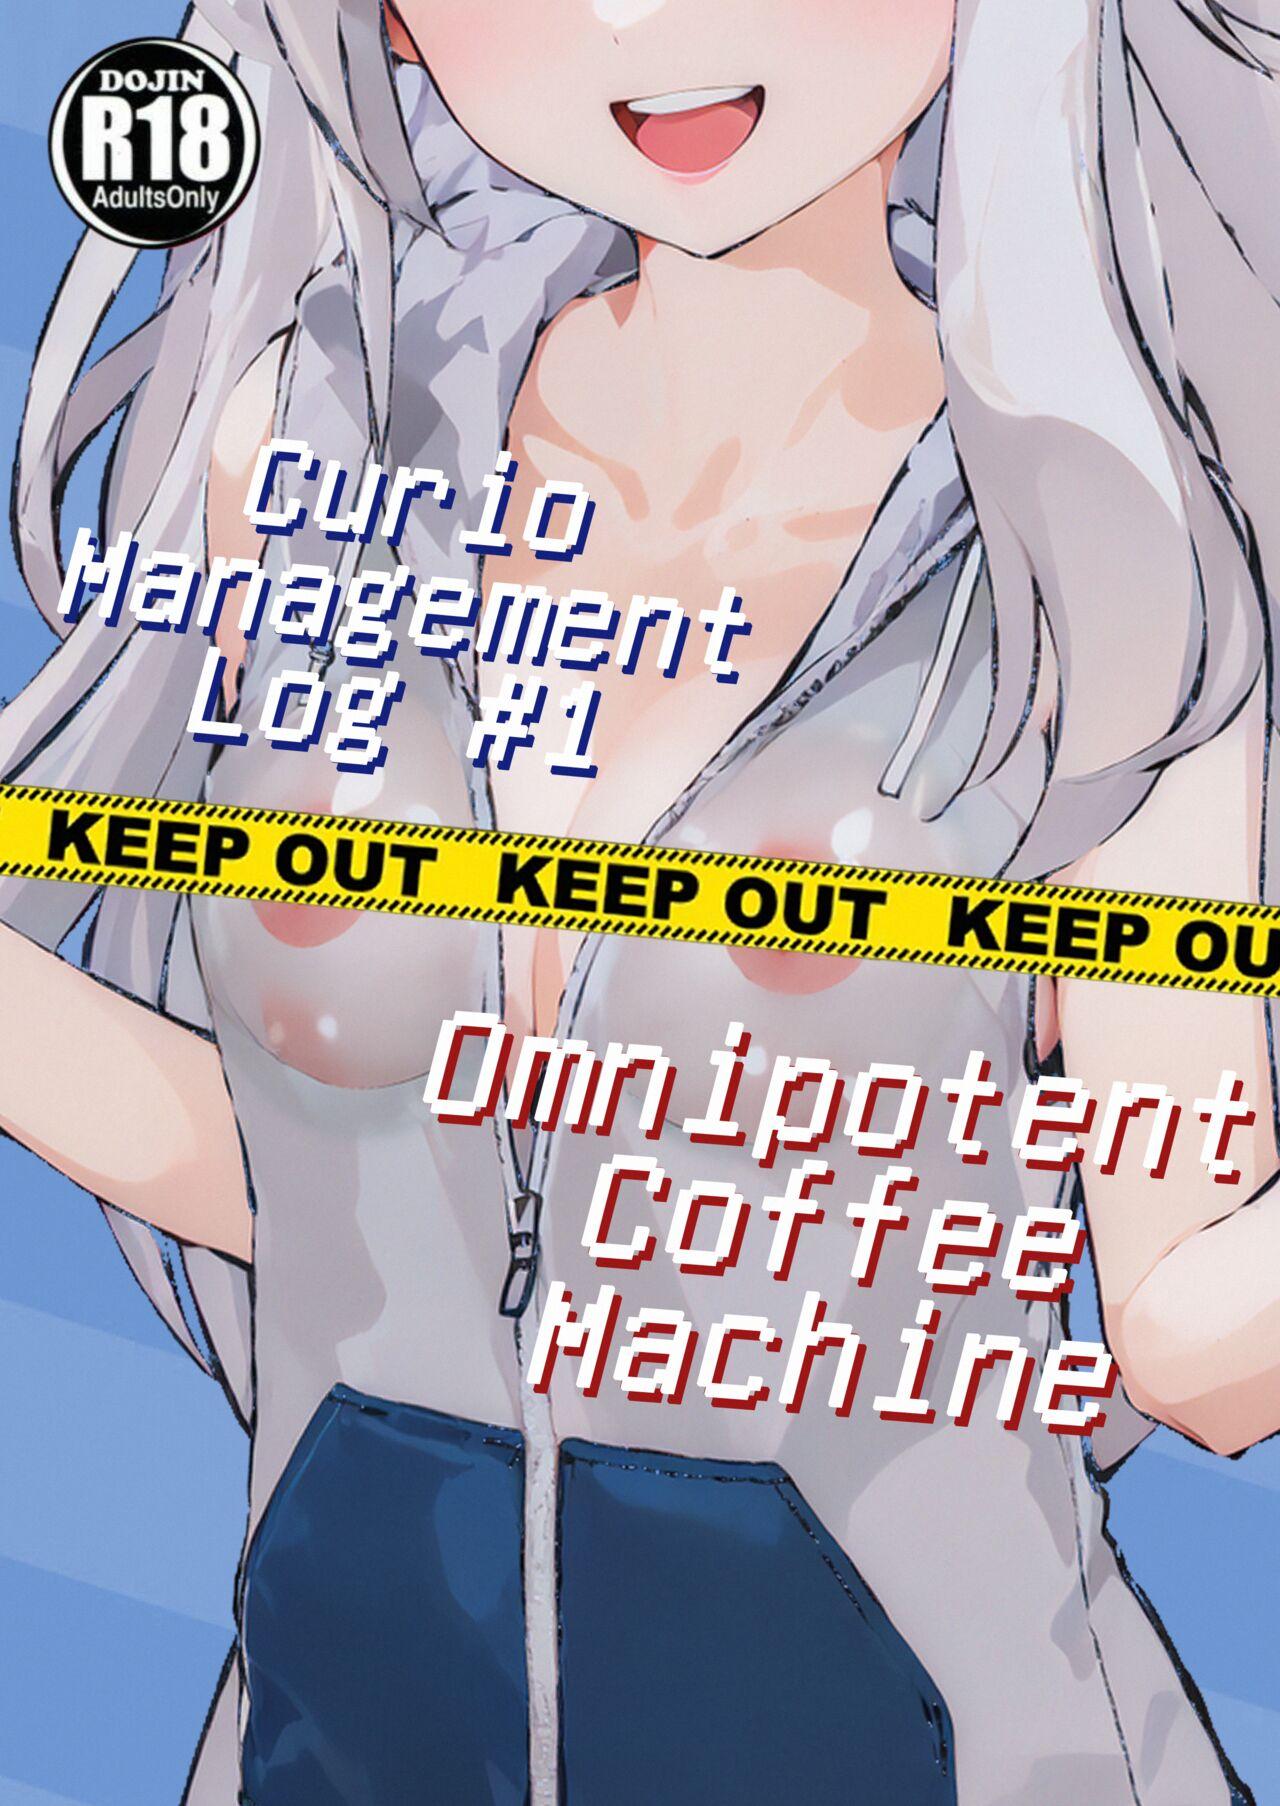 Curio Management Log #1 | Omnipotent Coffee Machine 0